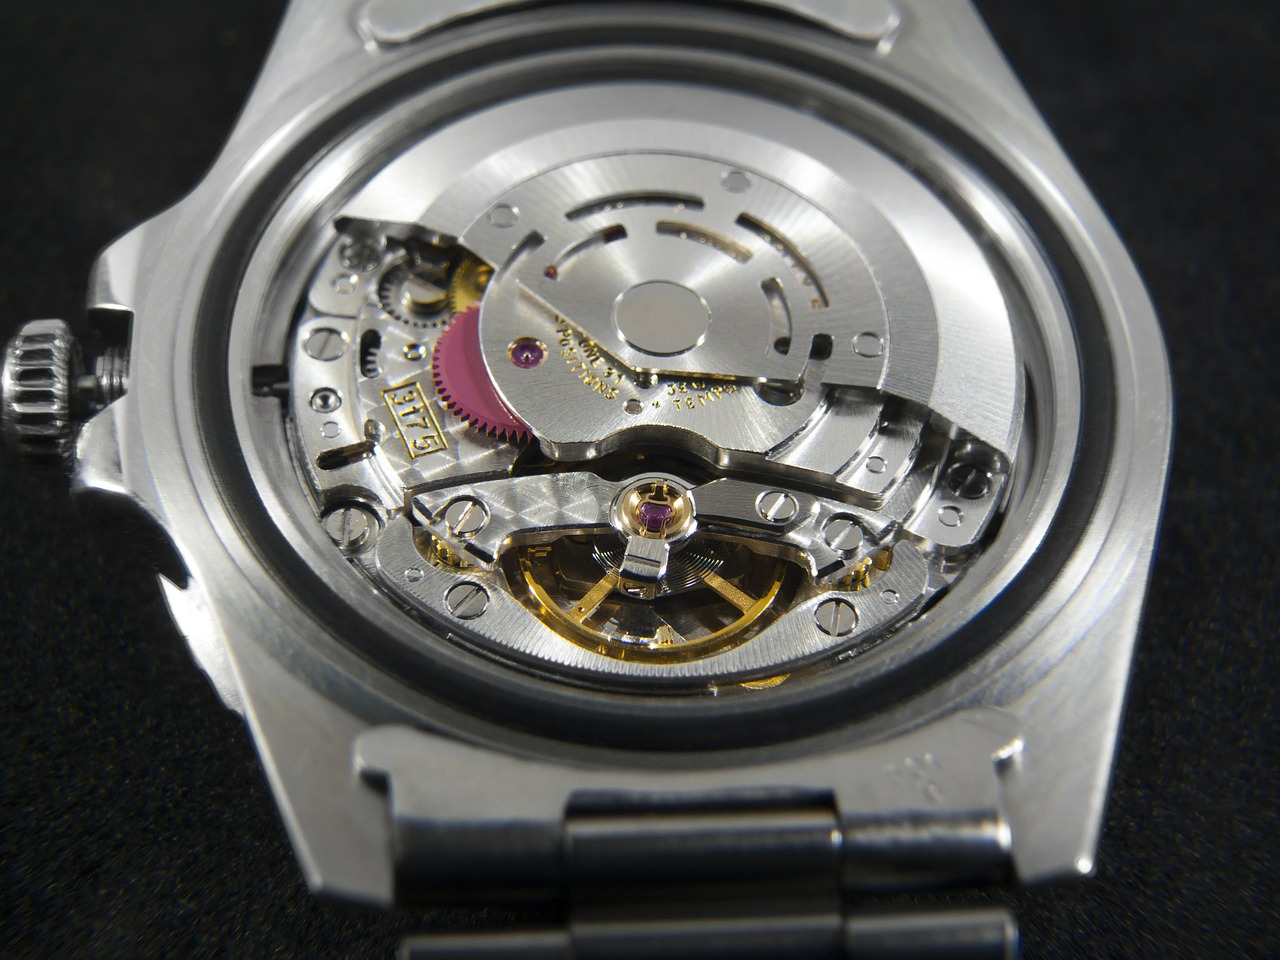 Rolex Watches, Watch Parts, Watch Movements, Hand-assembled, Silver Watch